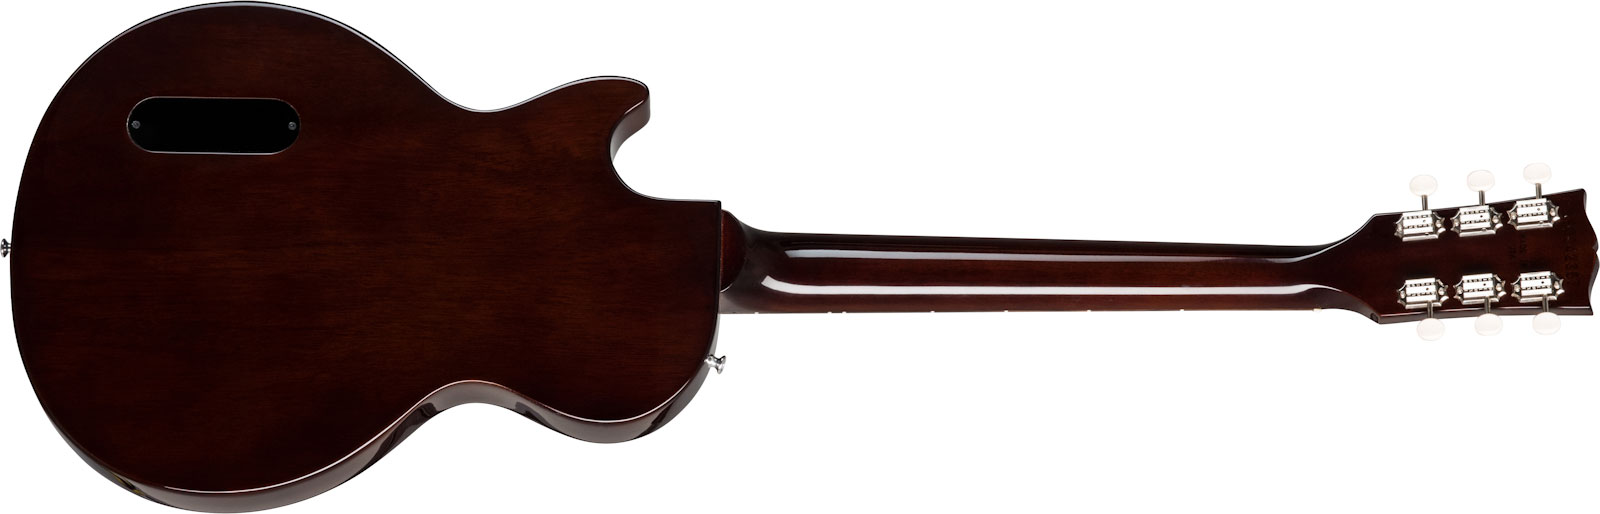 Gibson Les Paul Junior Original P90 Ht Rw - Vintage Tobacco Burst - Guitarra eléctrica de corte único. - Variation 1